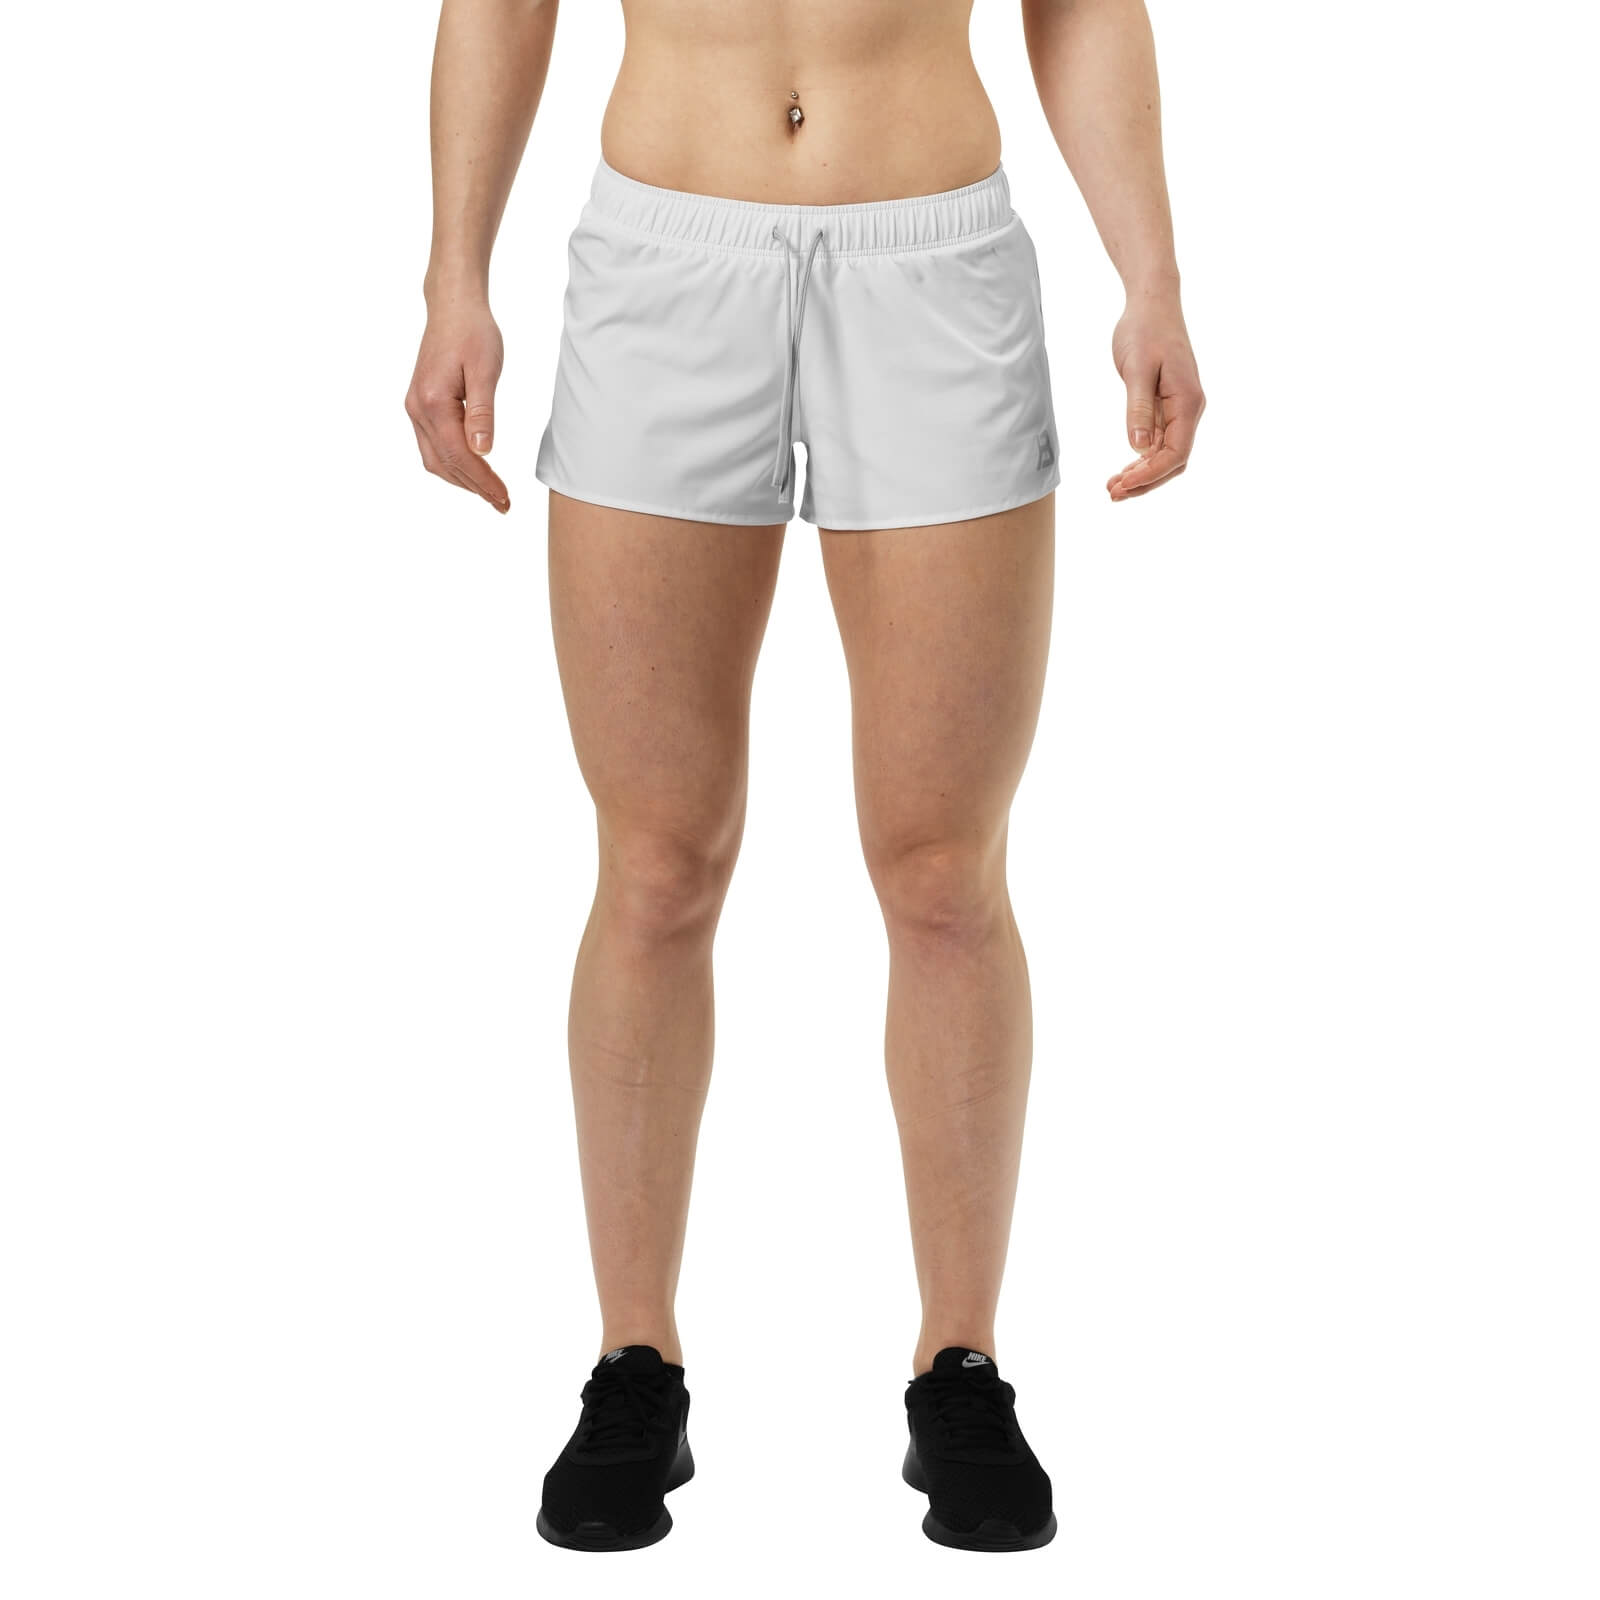 Sjekke Nolita Shorts, white, Better Bodies hos SportGymButikken.no